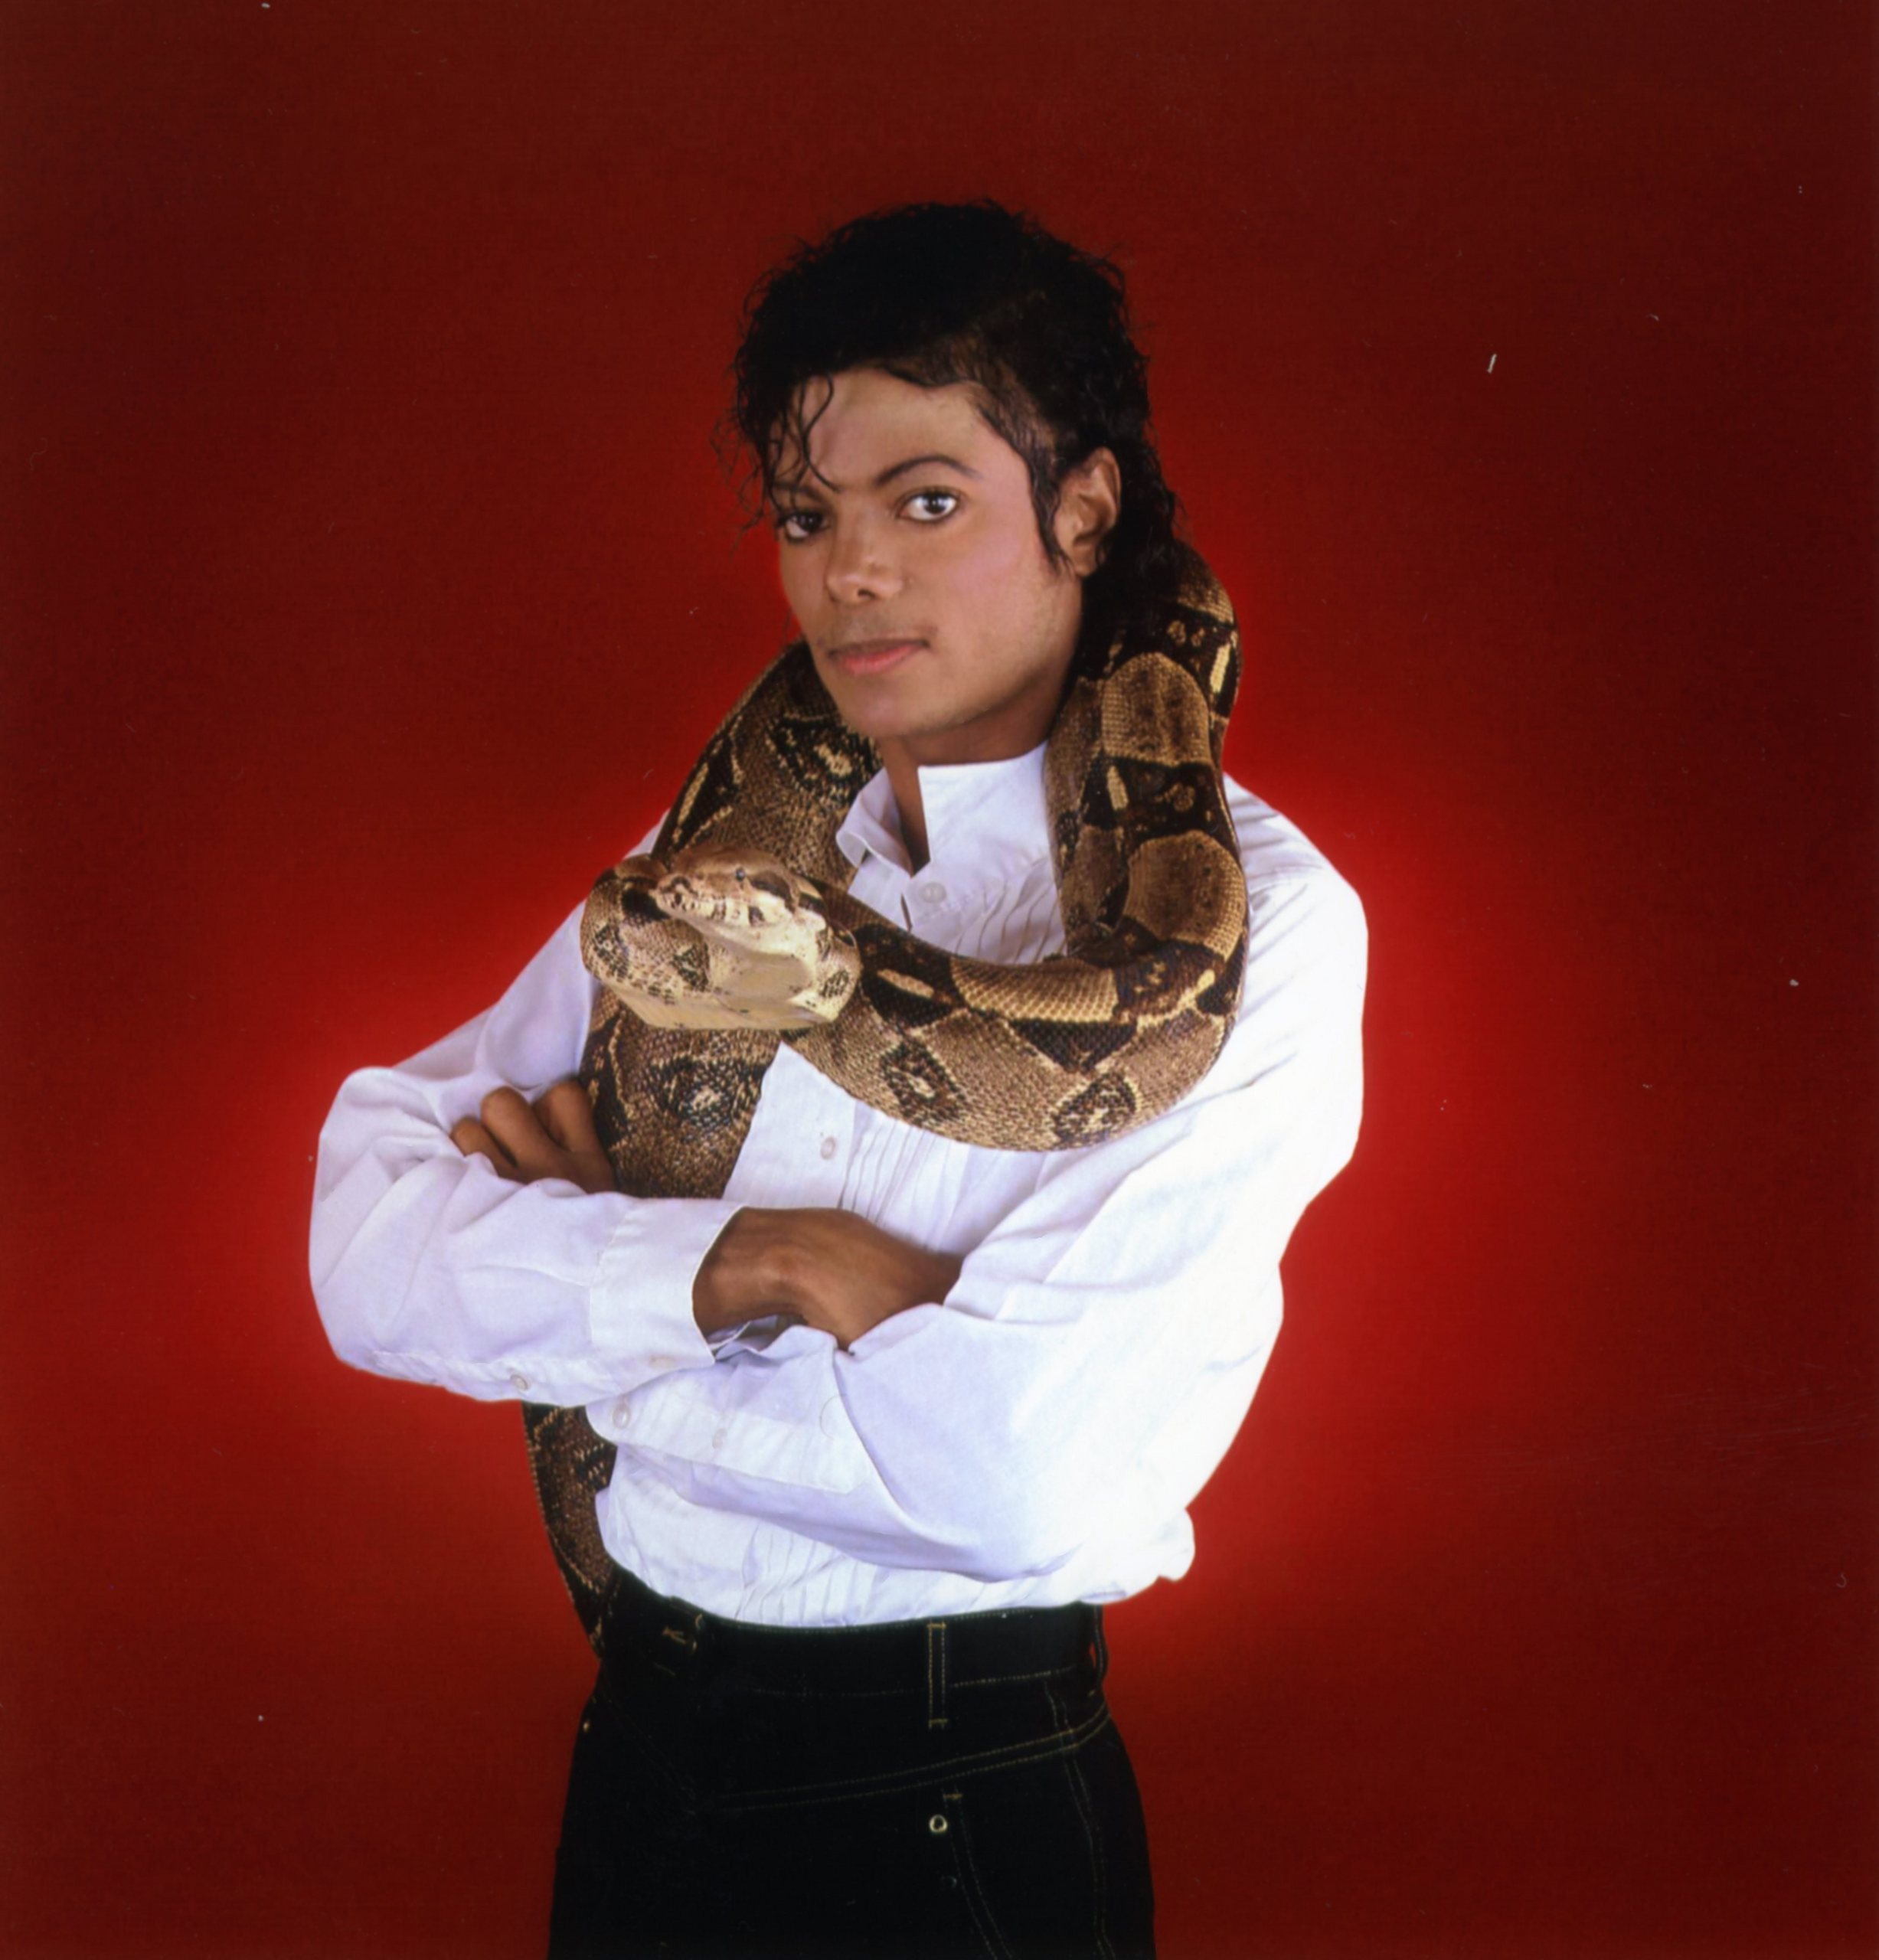 MJ-with-animals-michael-jackson-11640761-2454-2560.jpg